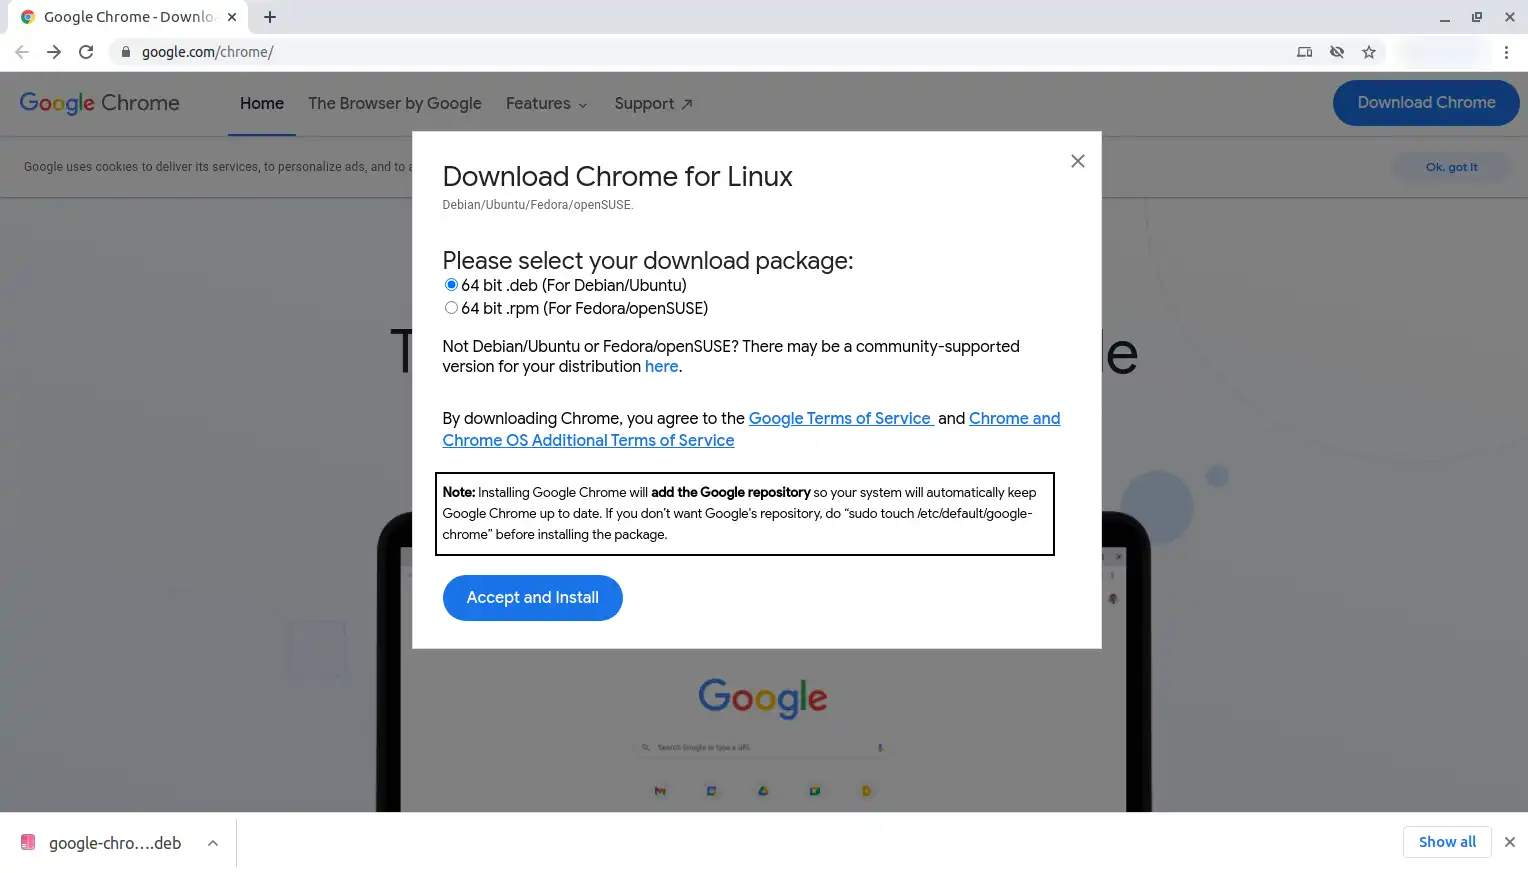 Screenshot of Google Chrome's download page (https://www.google.com/chrome/)